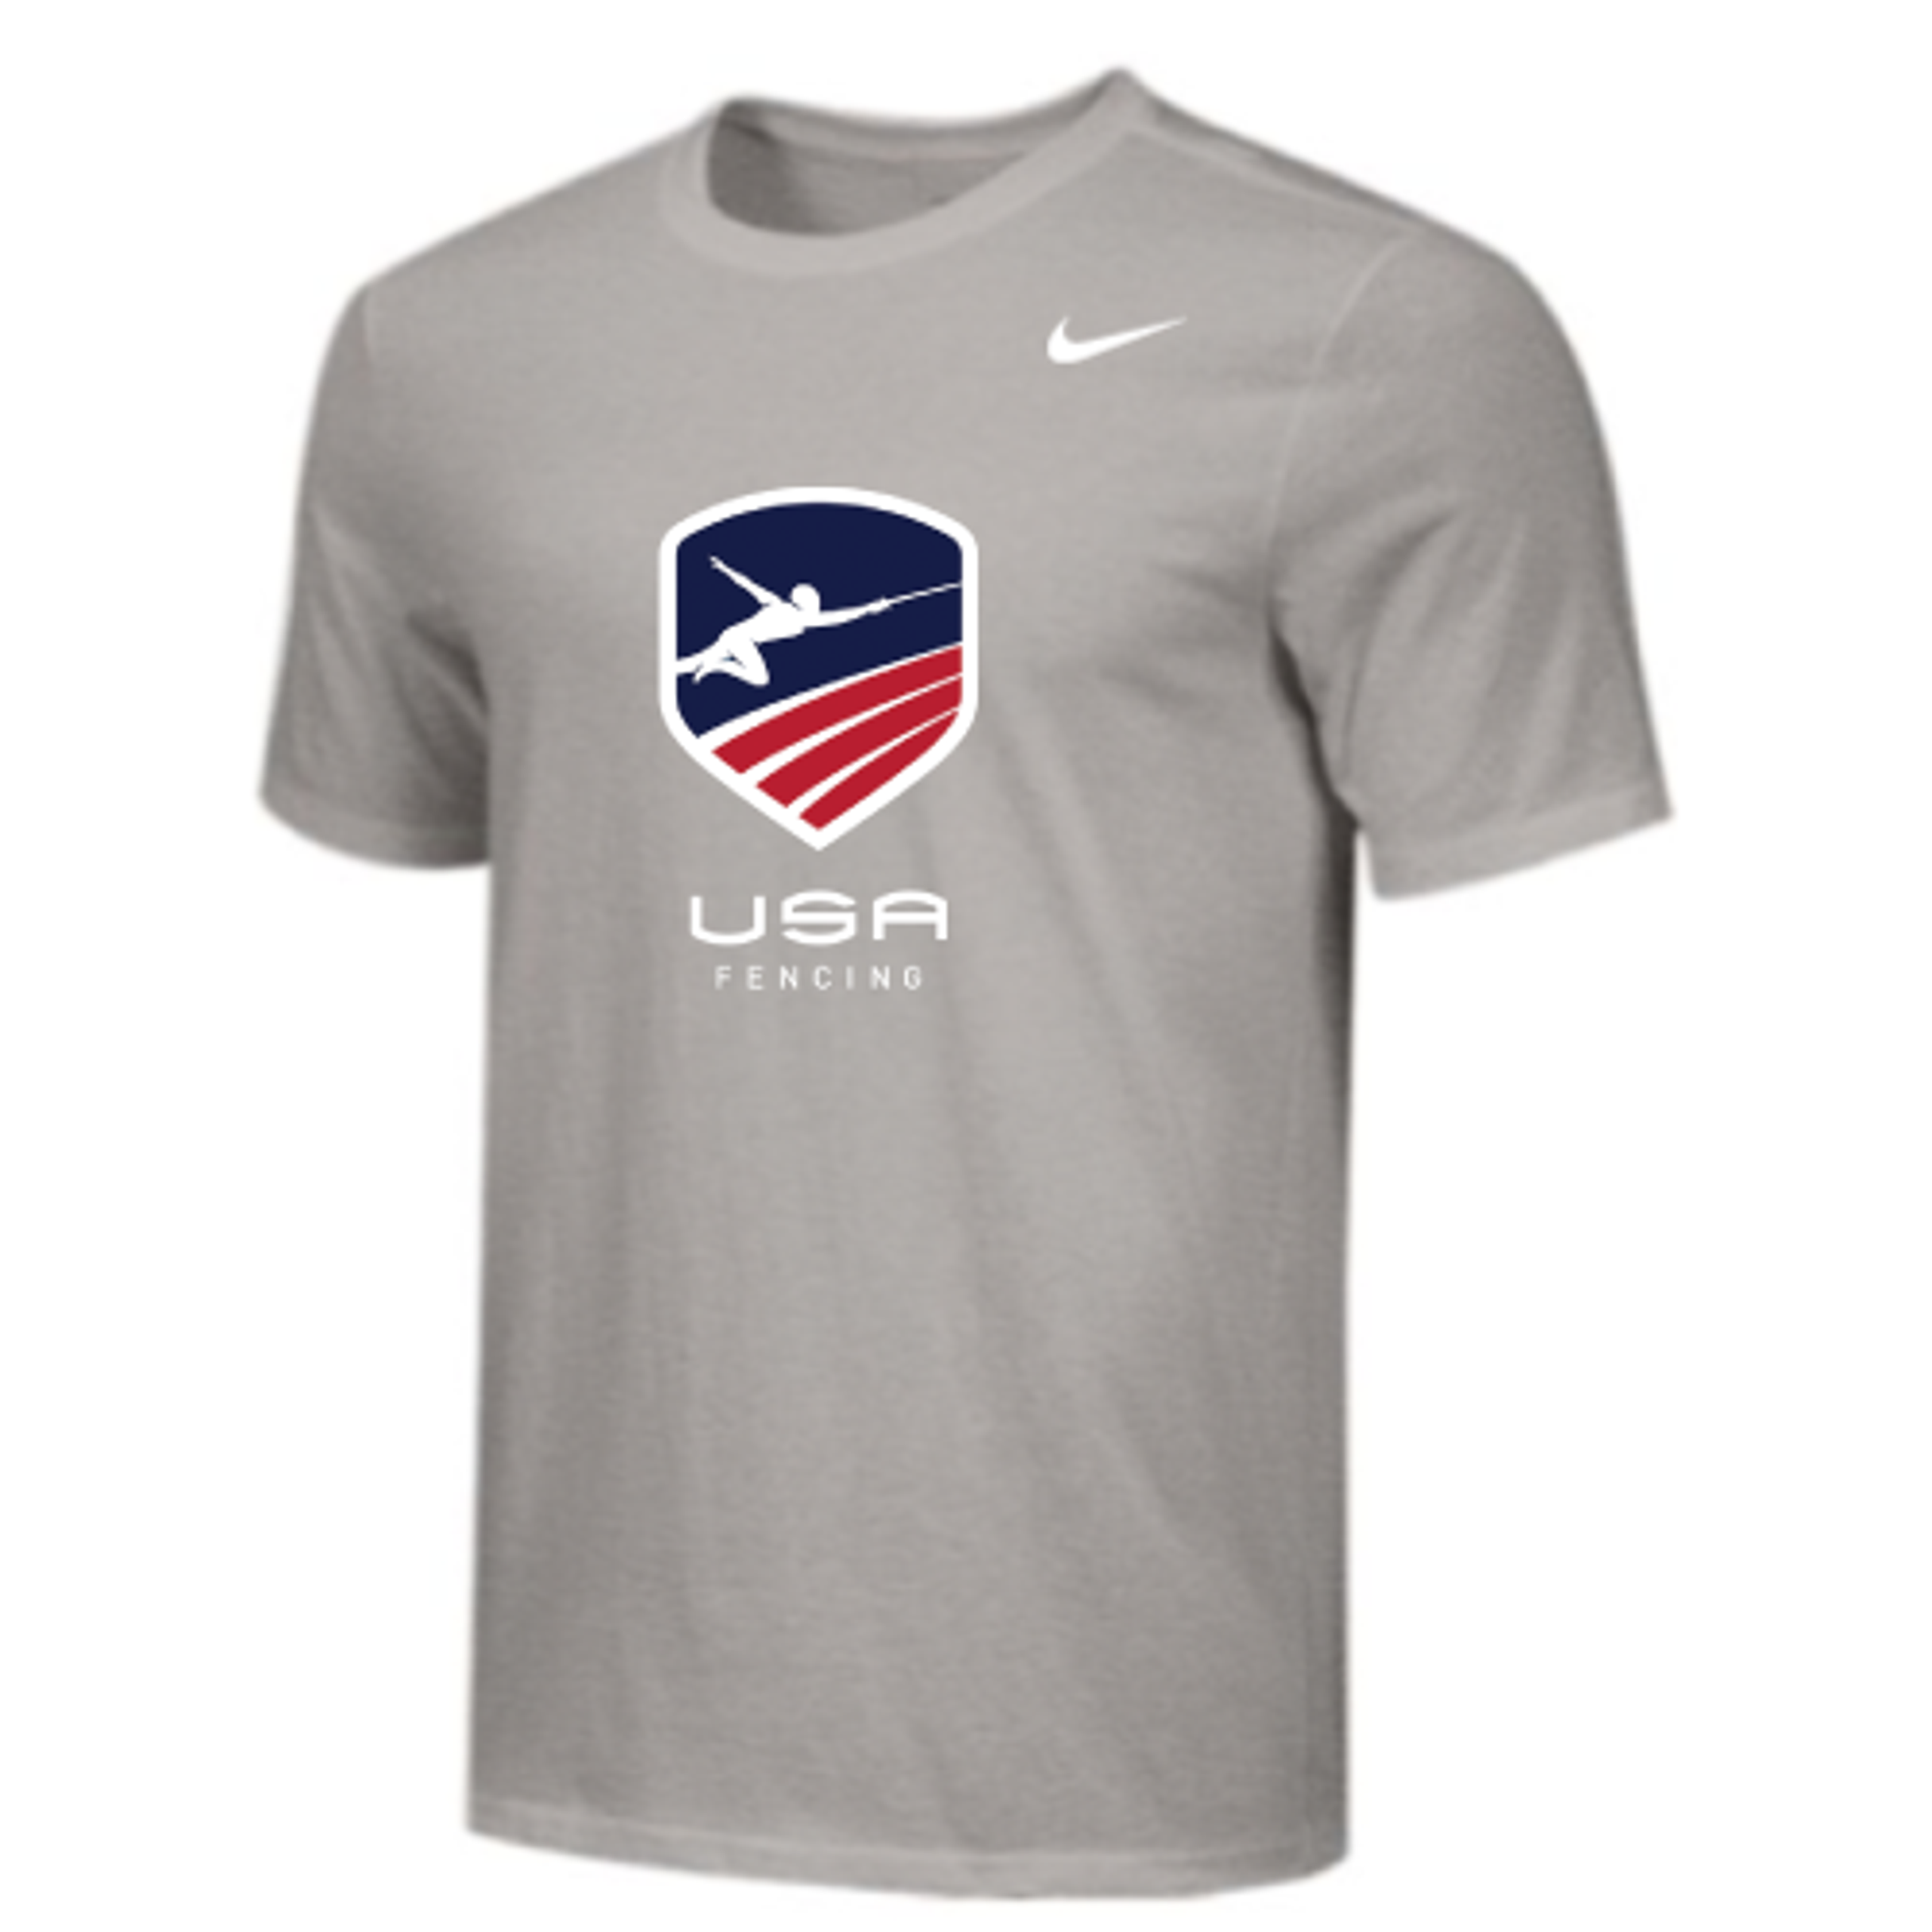 Nike USA Fencing Men's Apparel